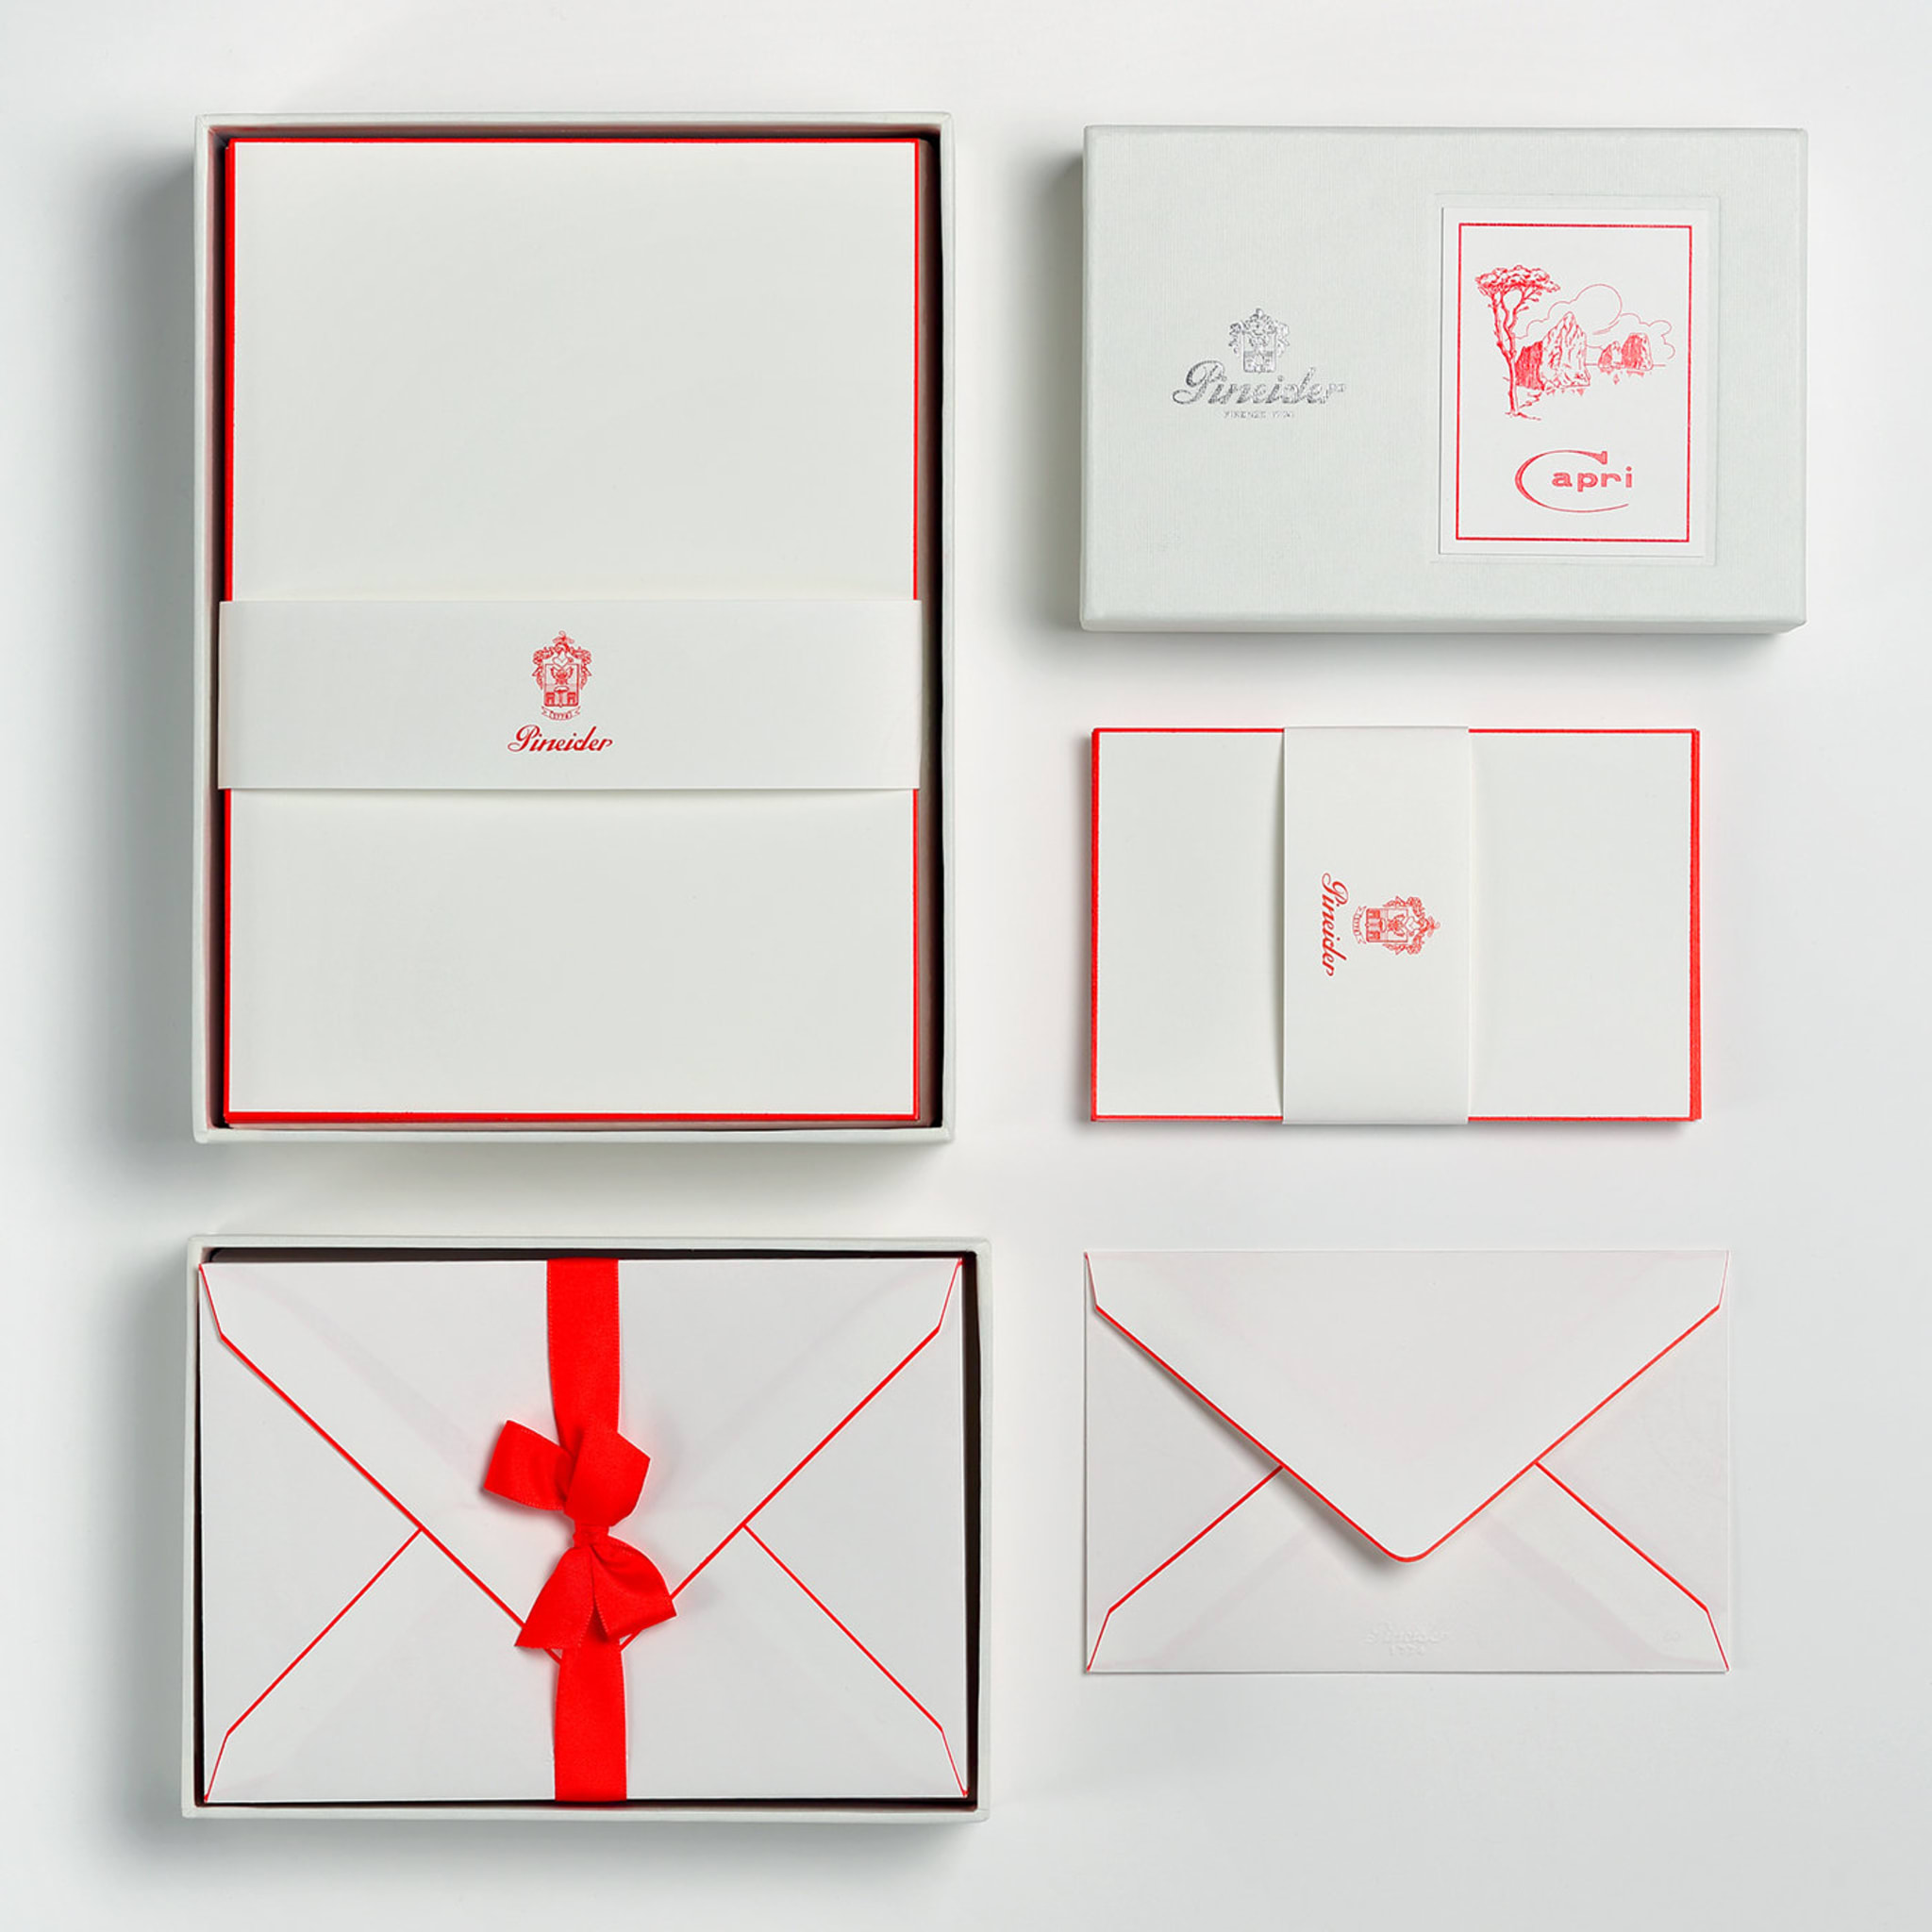 Capri Set of Sheets and Envelopes 210 x 148 mm - Alternative view 2